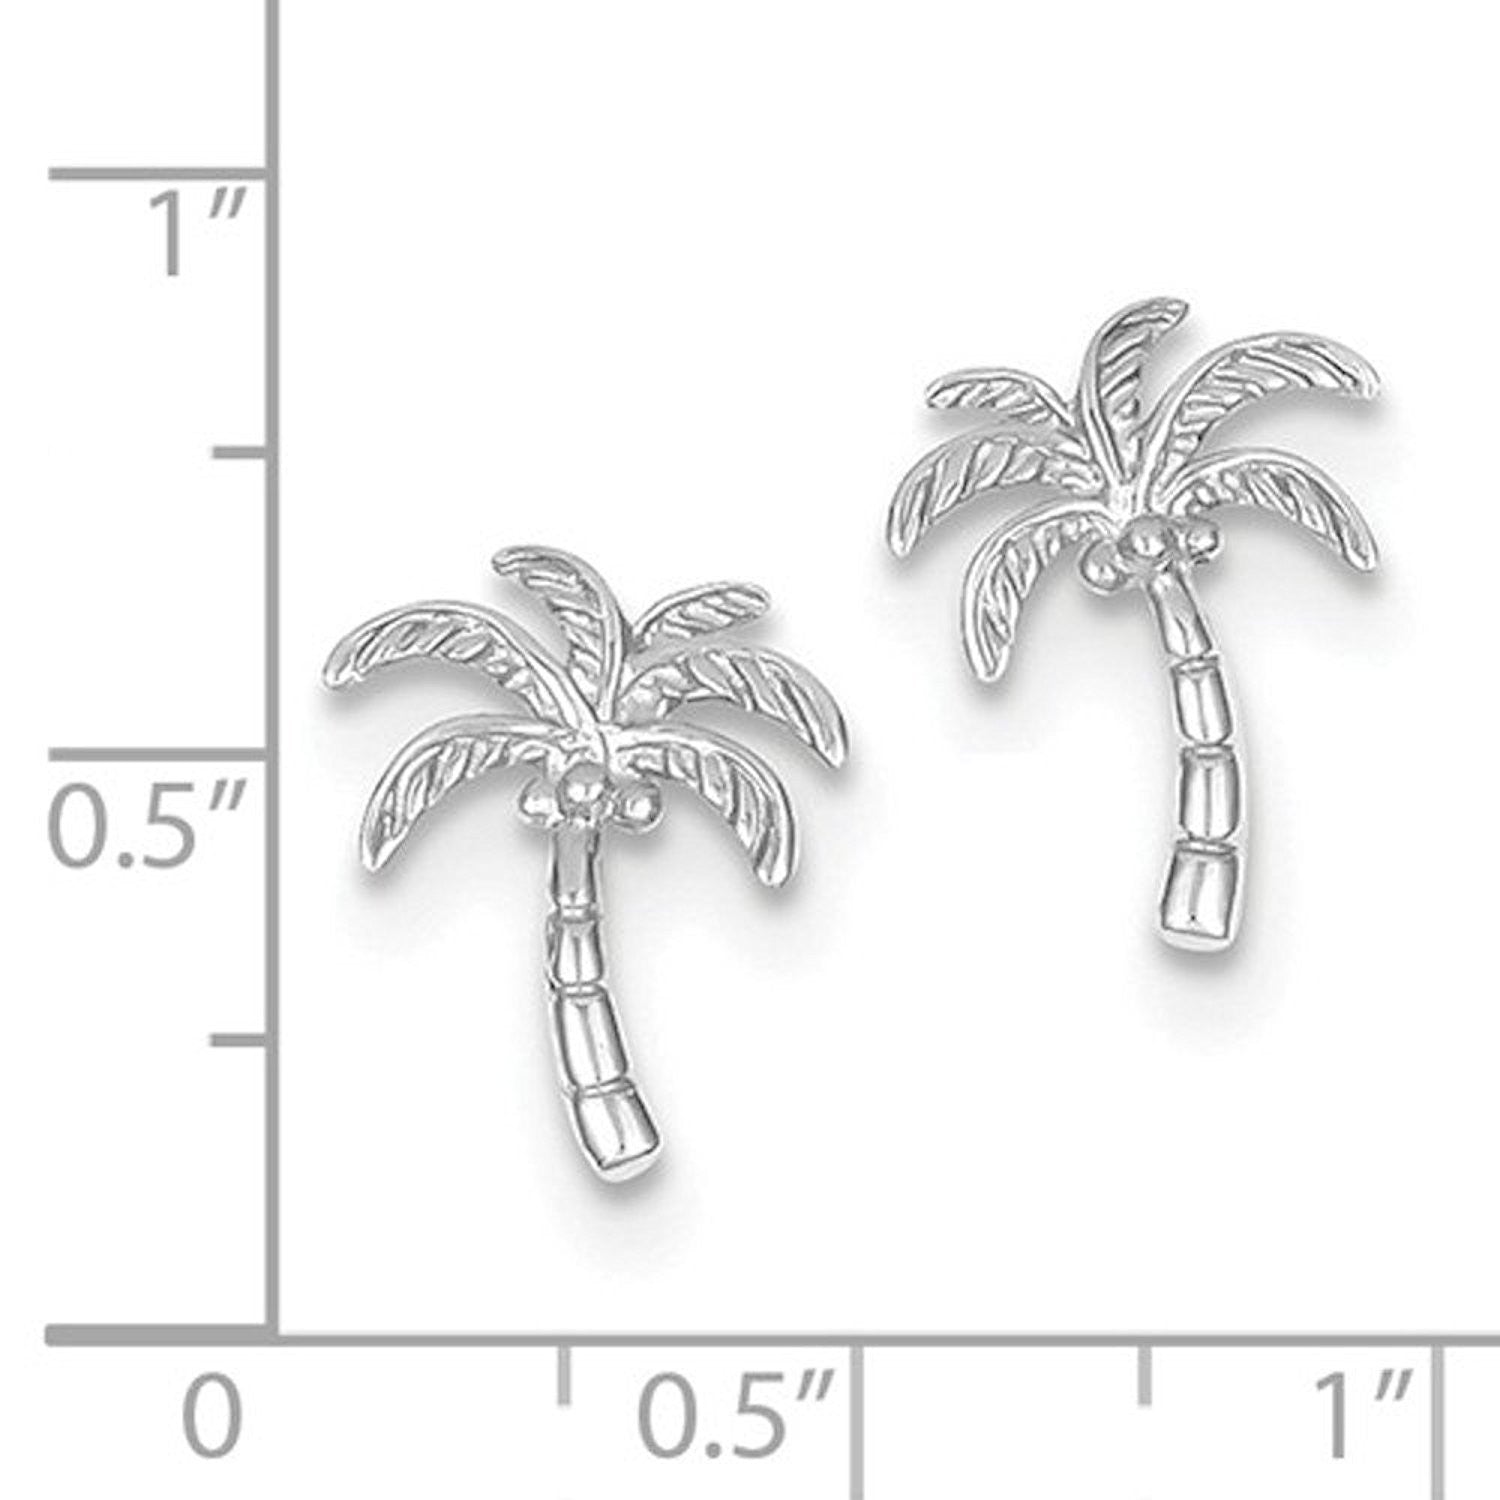 14k White Gold Palm Tree Stud Post Earrings